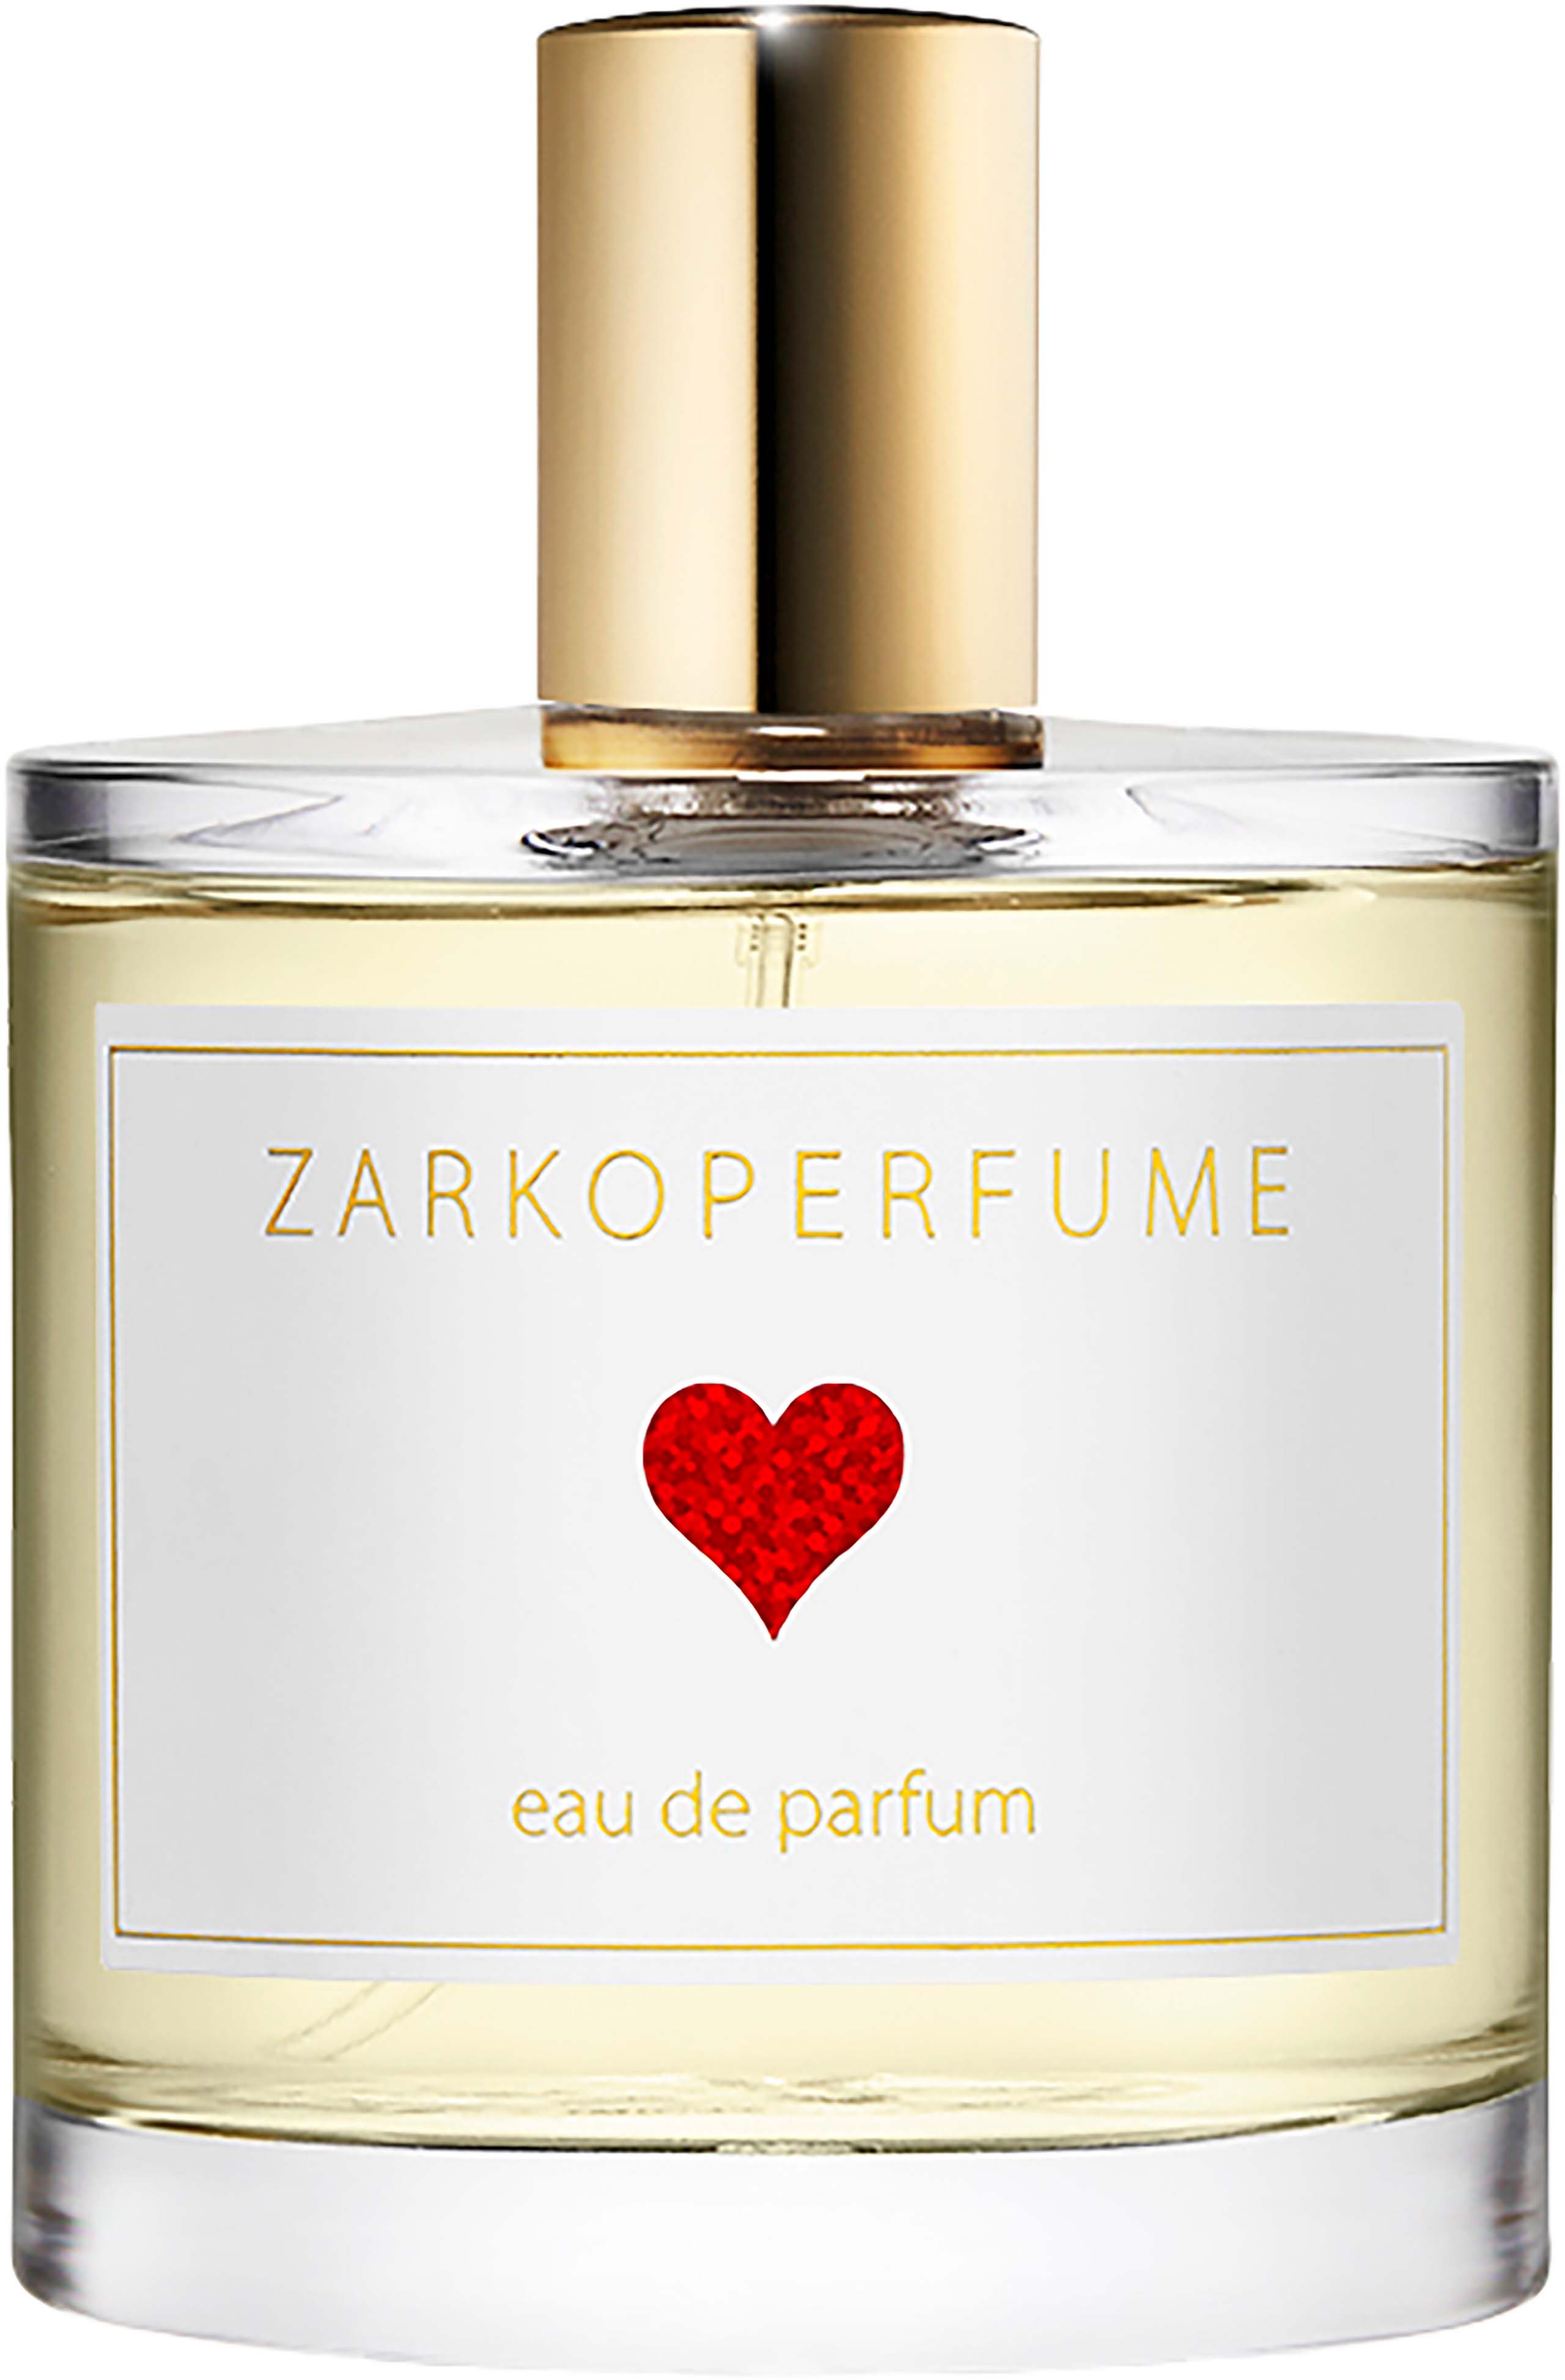 zarkoperfume sending love